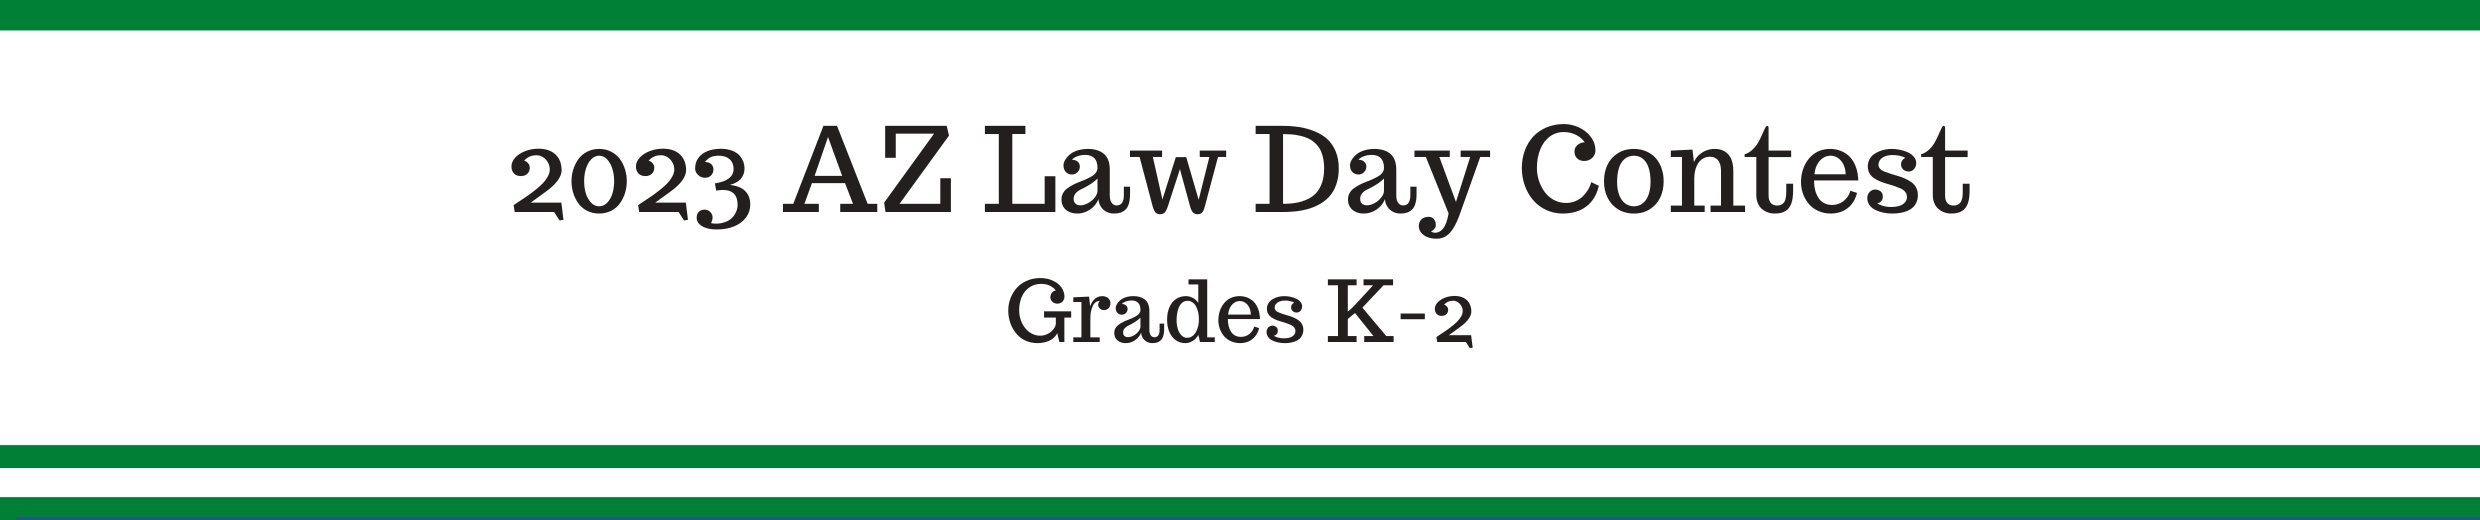 2023 AZ Law Day Contest Grades K-2